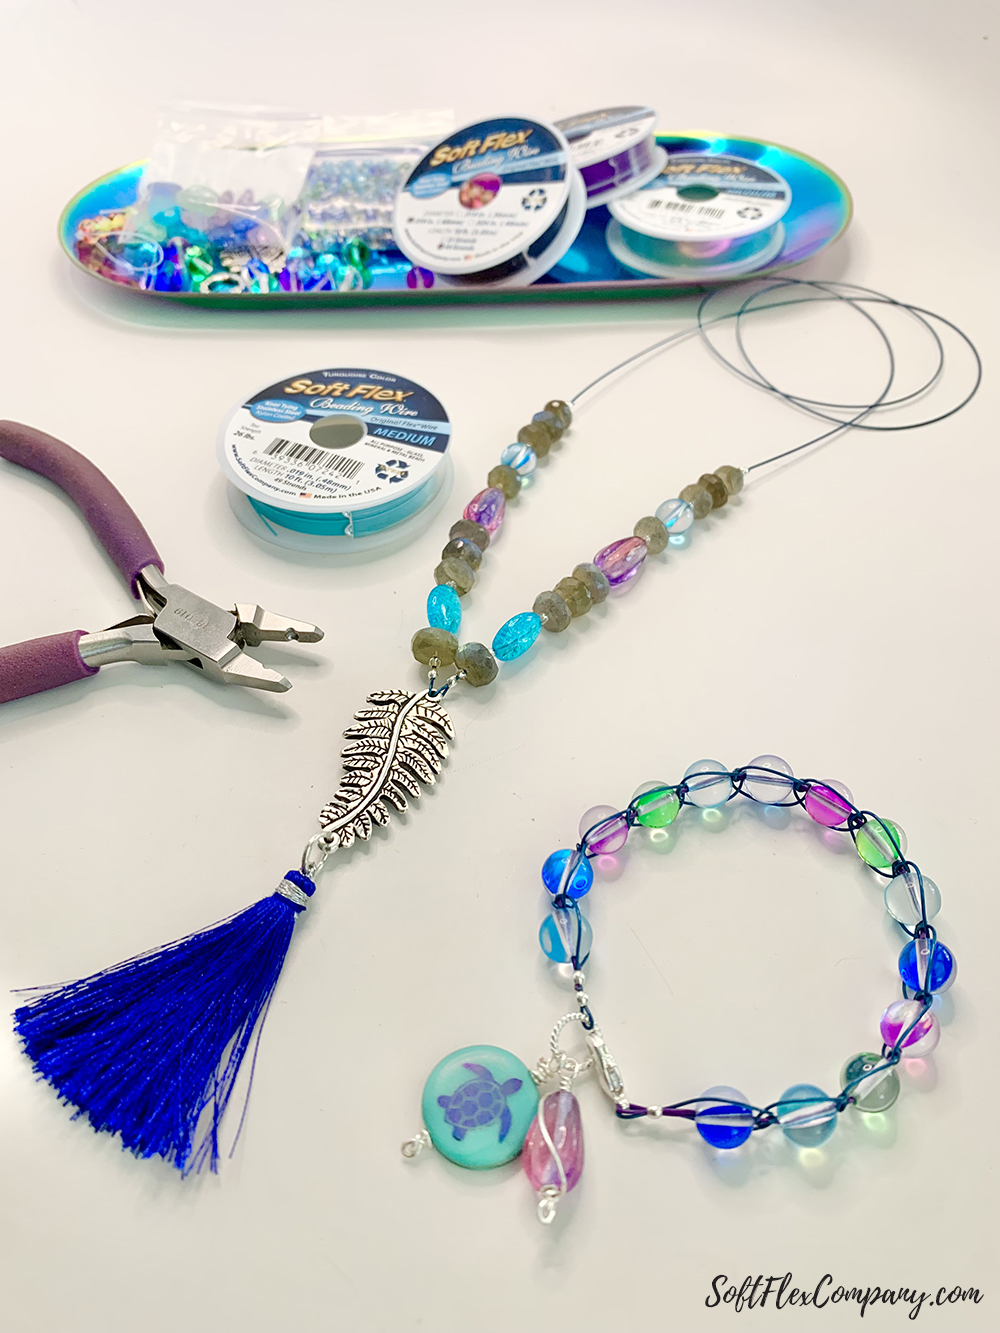 Sam's Bead Shop Below the Waves Necklace & Bracelet by Sara Oehler